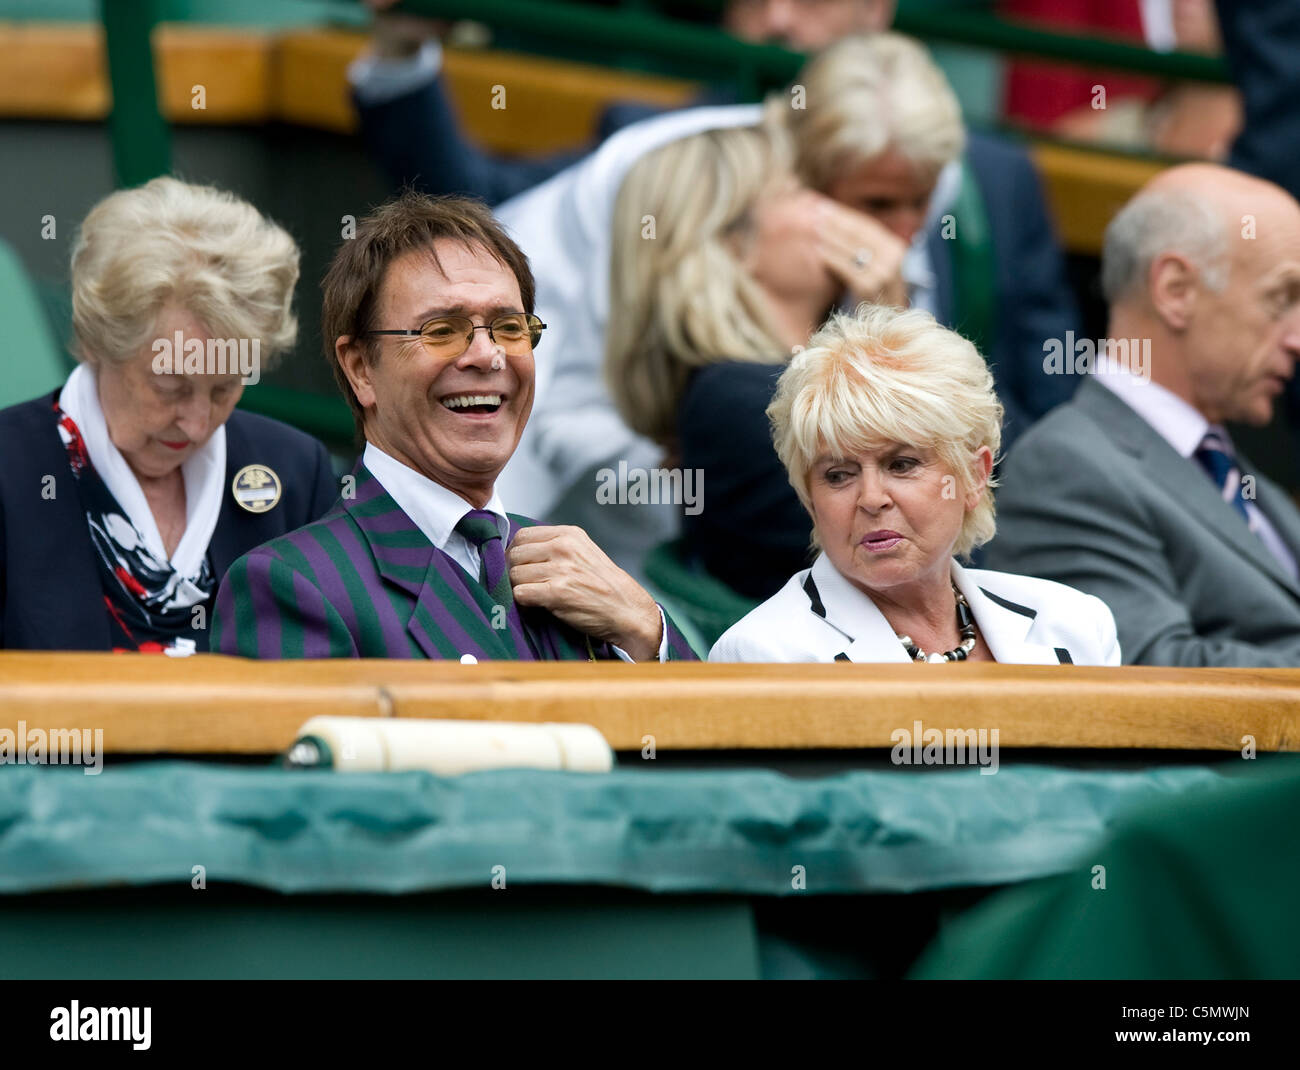 Sir Cliff Richard and Gloria Hunniford in the Royal Box during the Wimbledon Tennis Championships 2011 Stock Photo